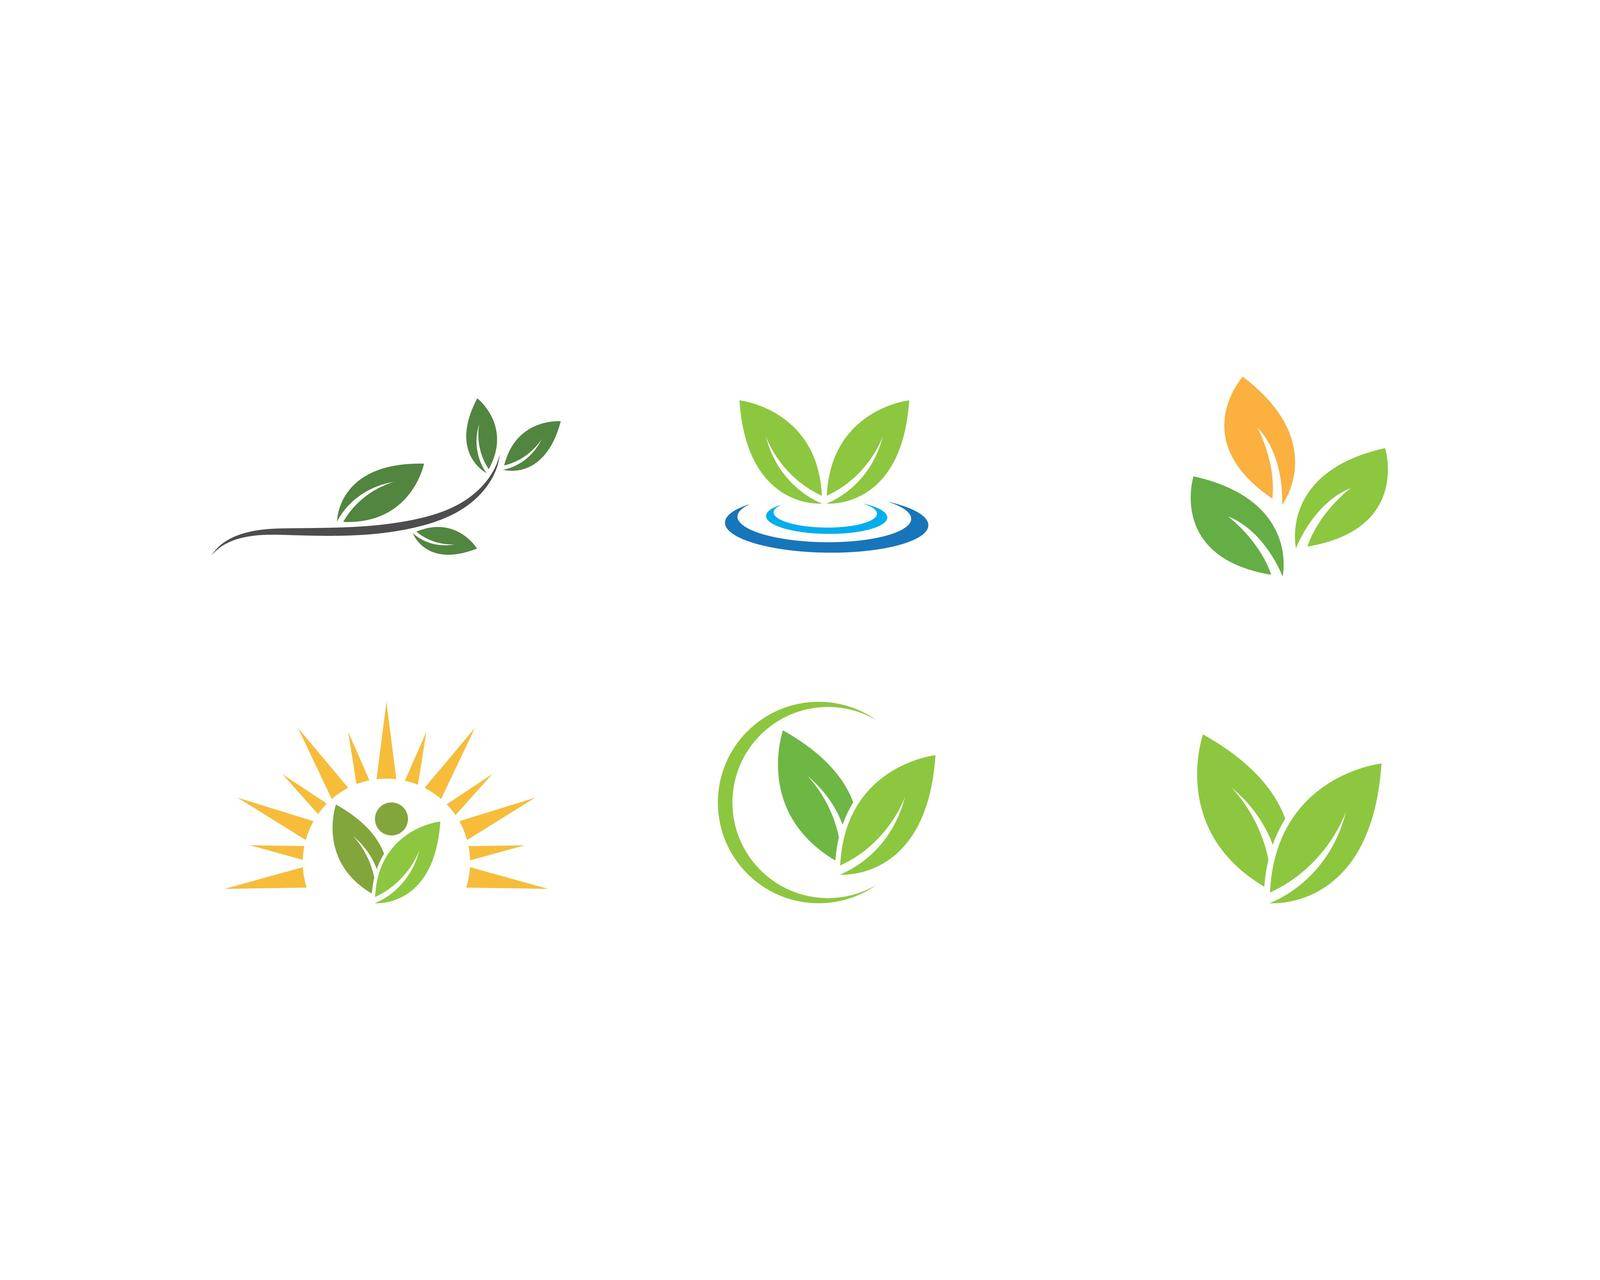 Logos of green leaf by awk